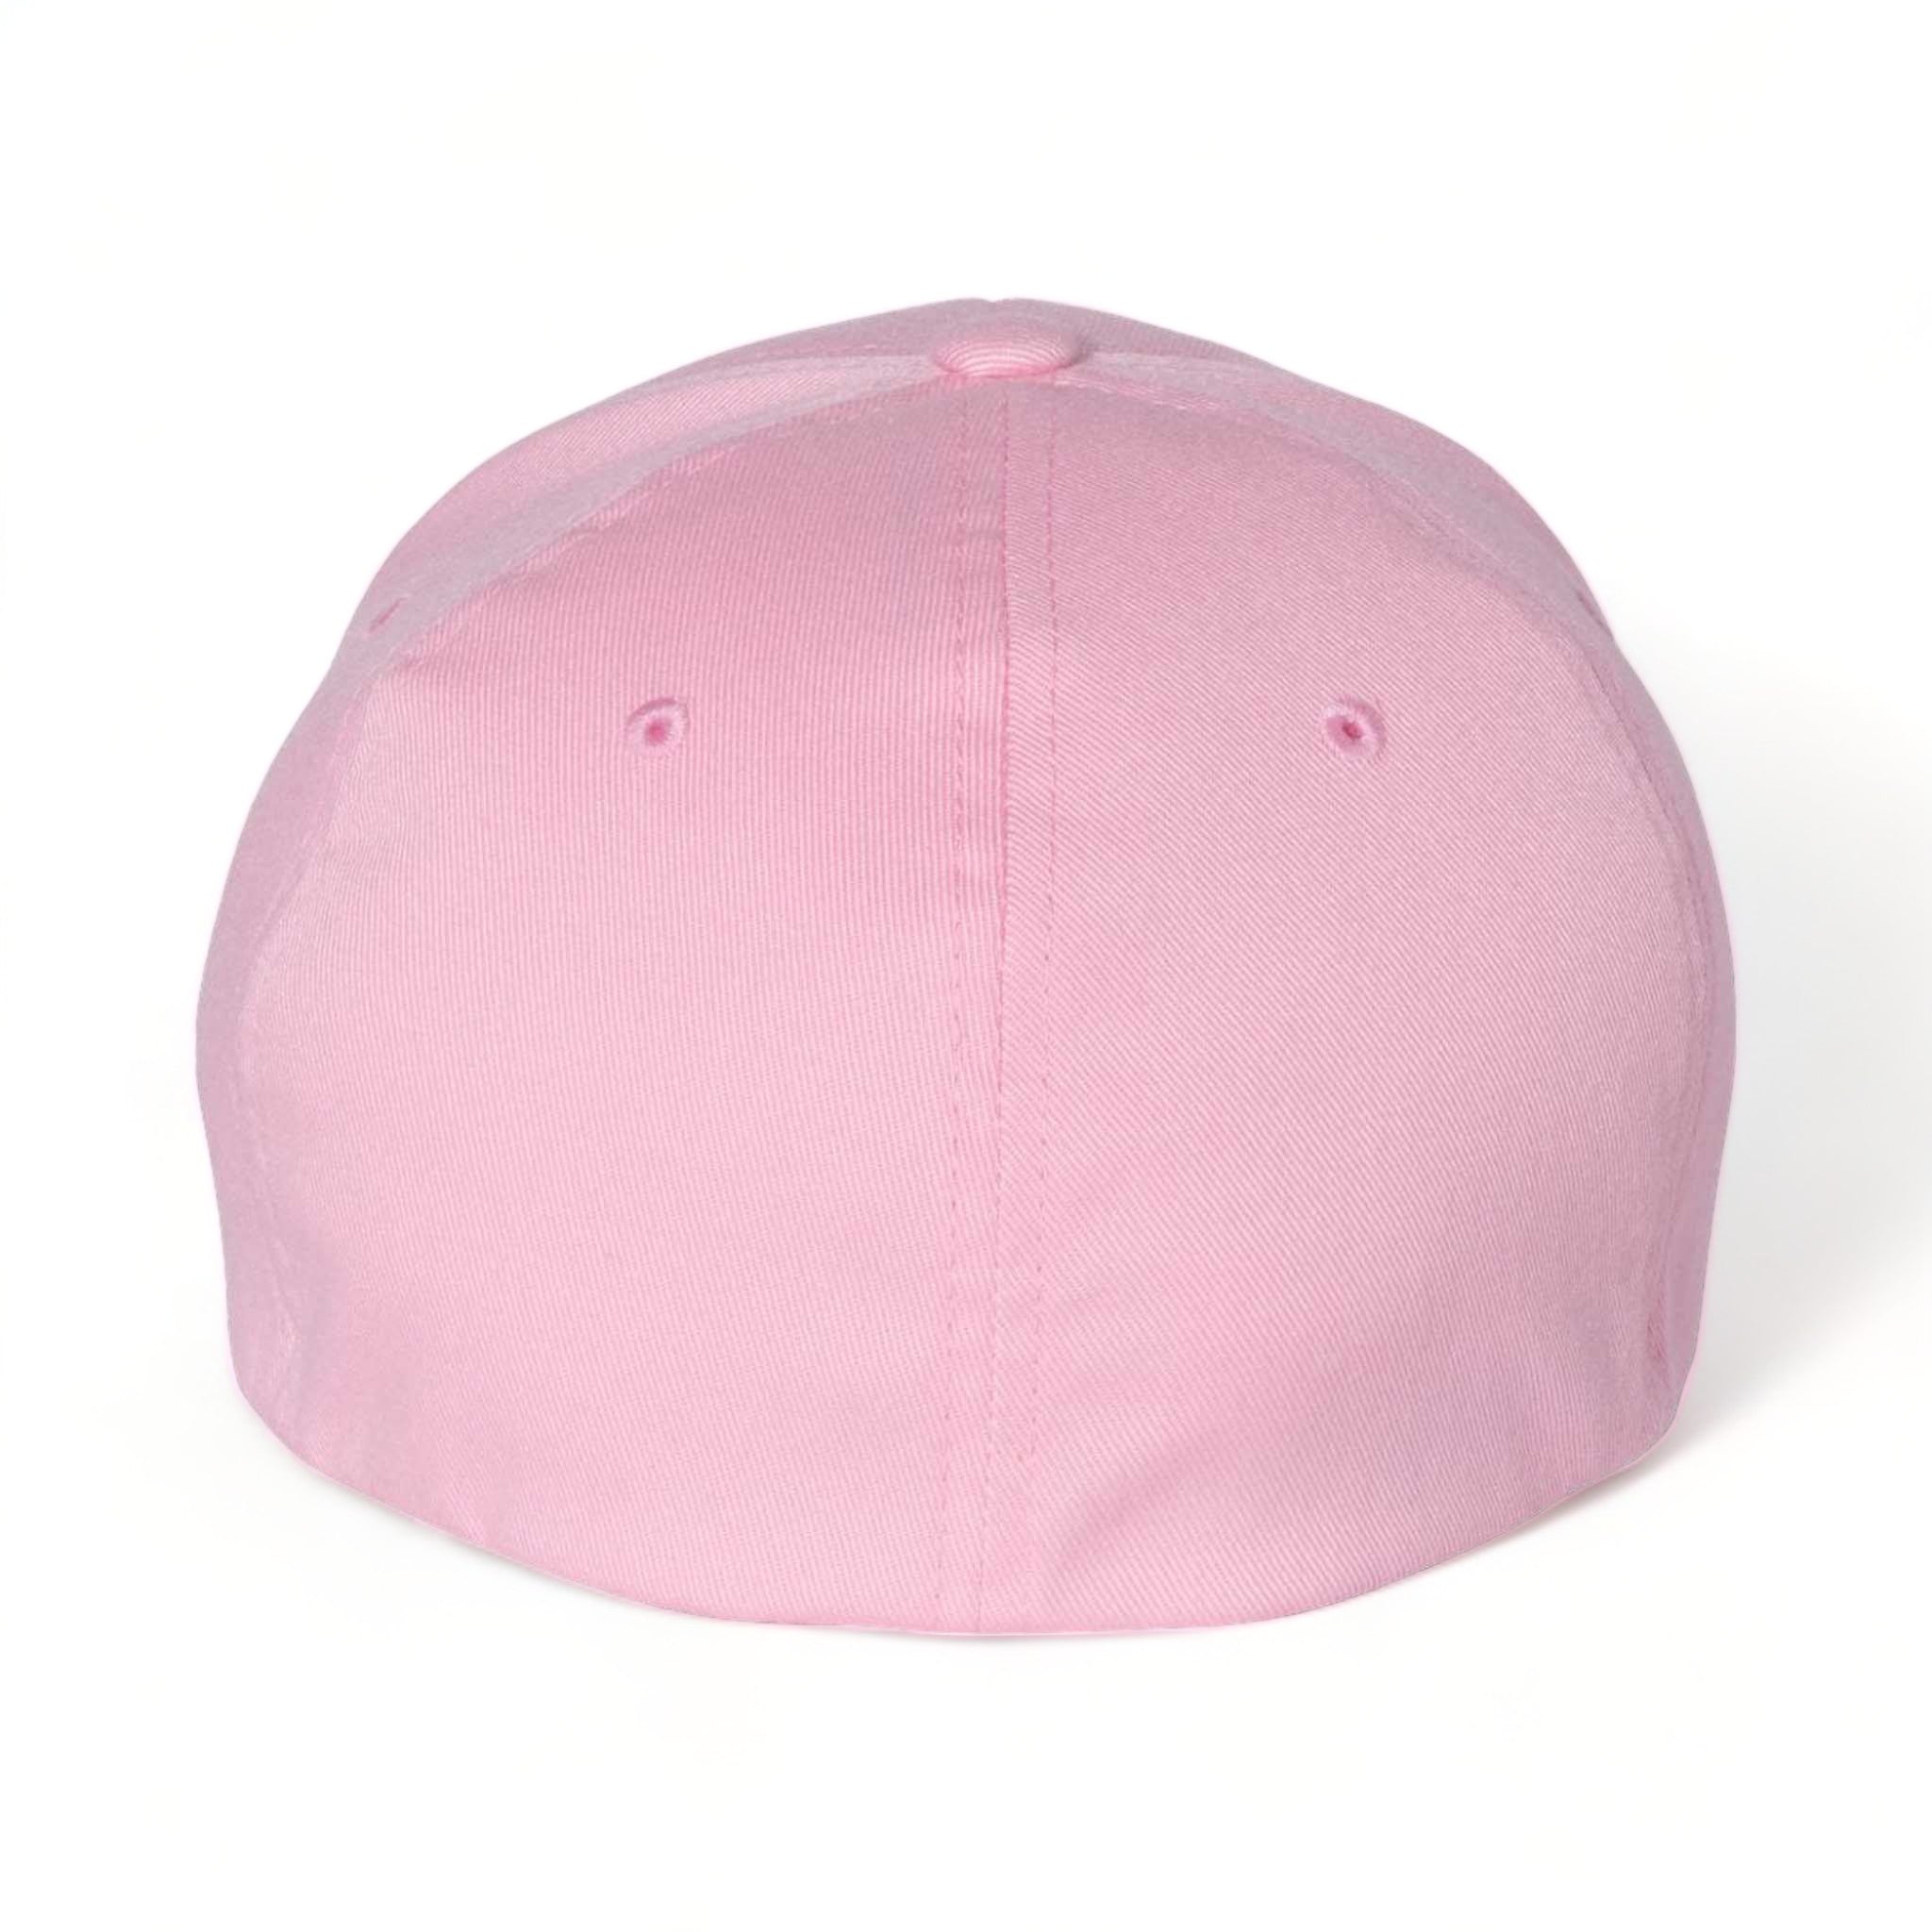 Back view of Flexfit 6277 custom hat in pink